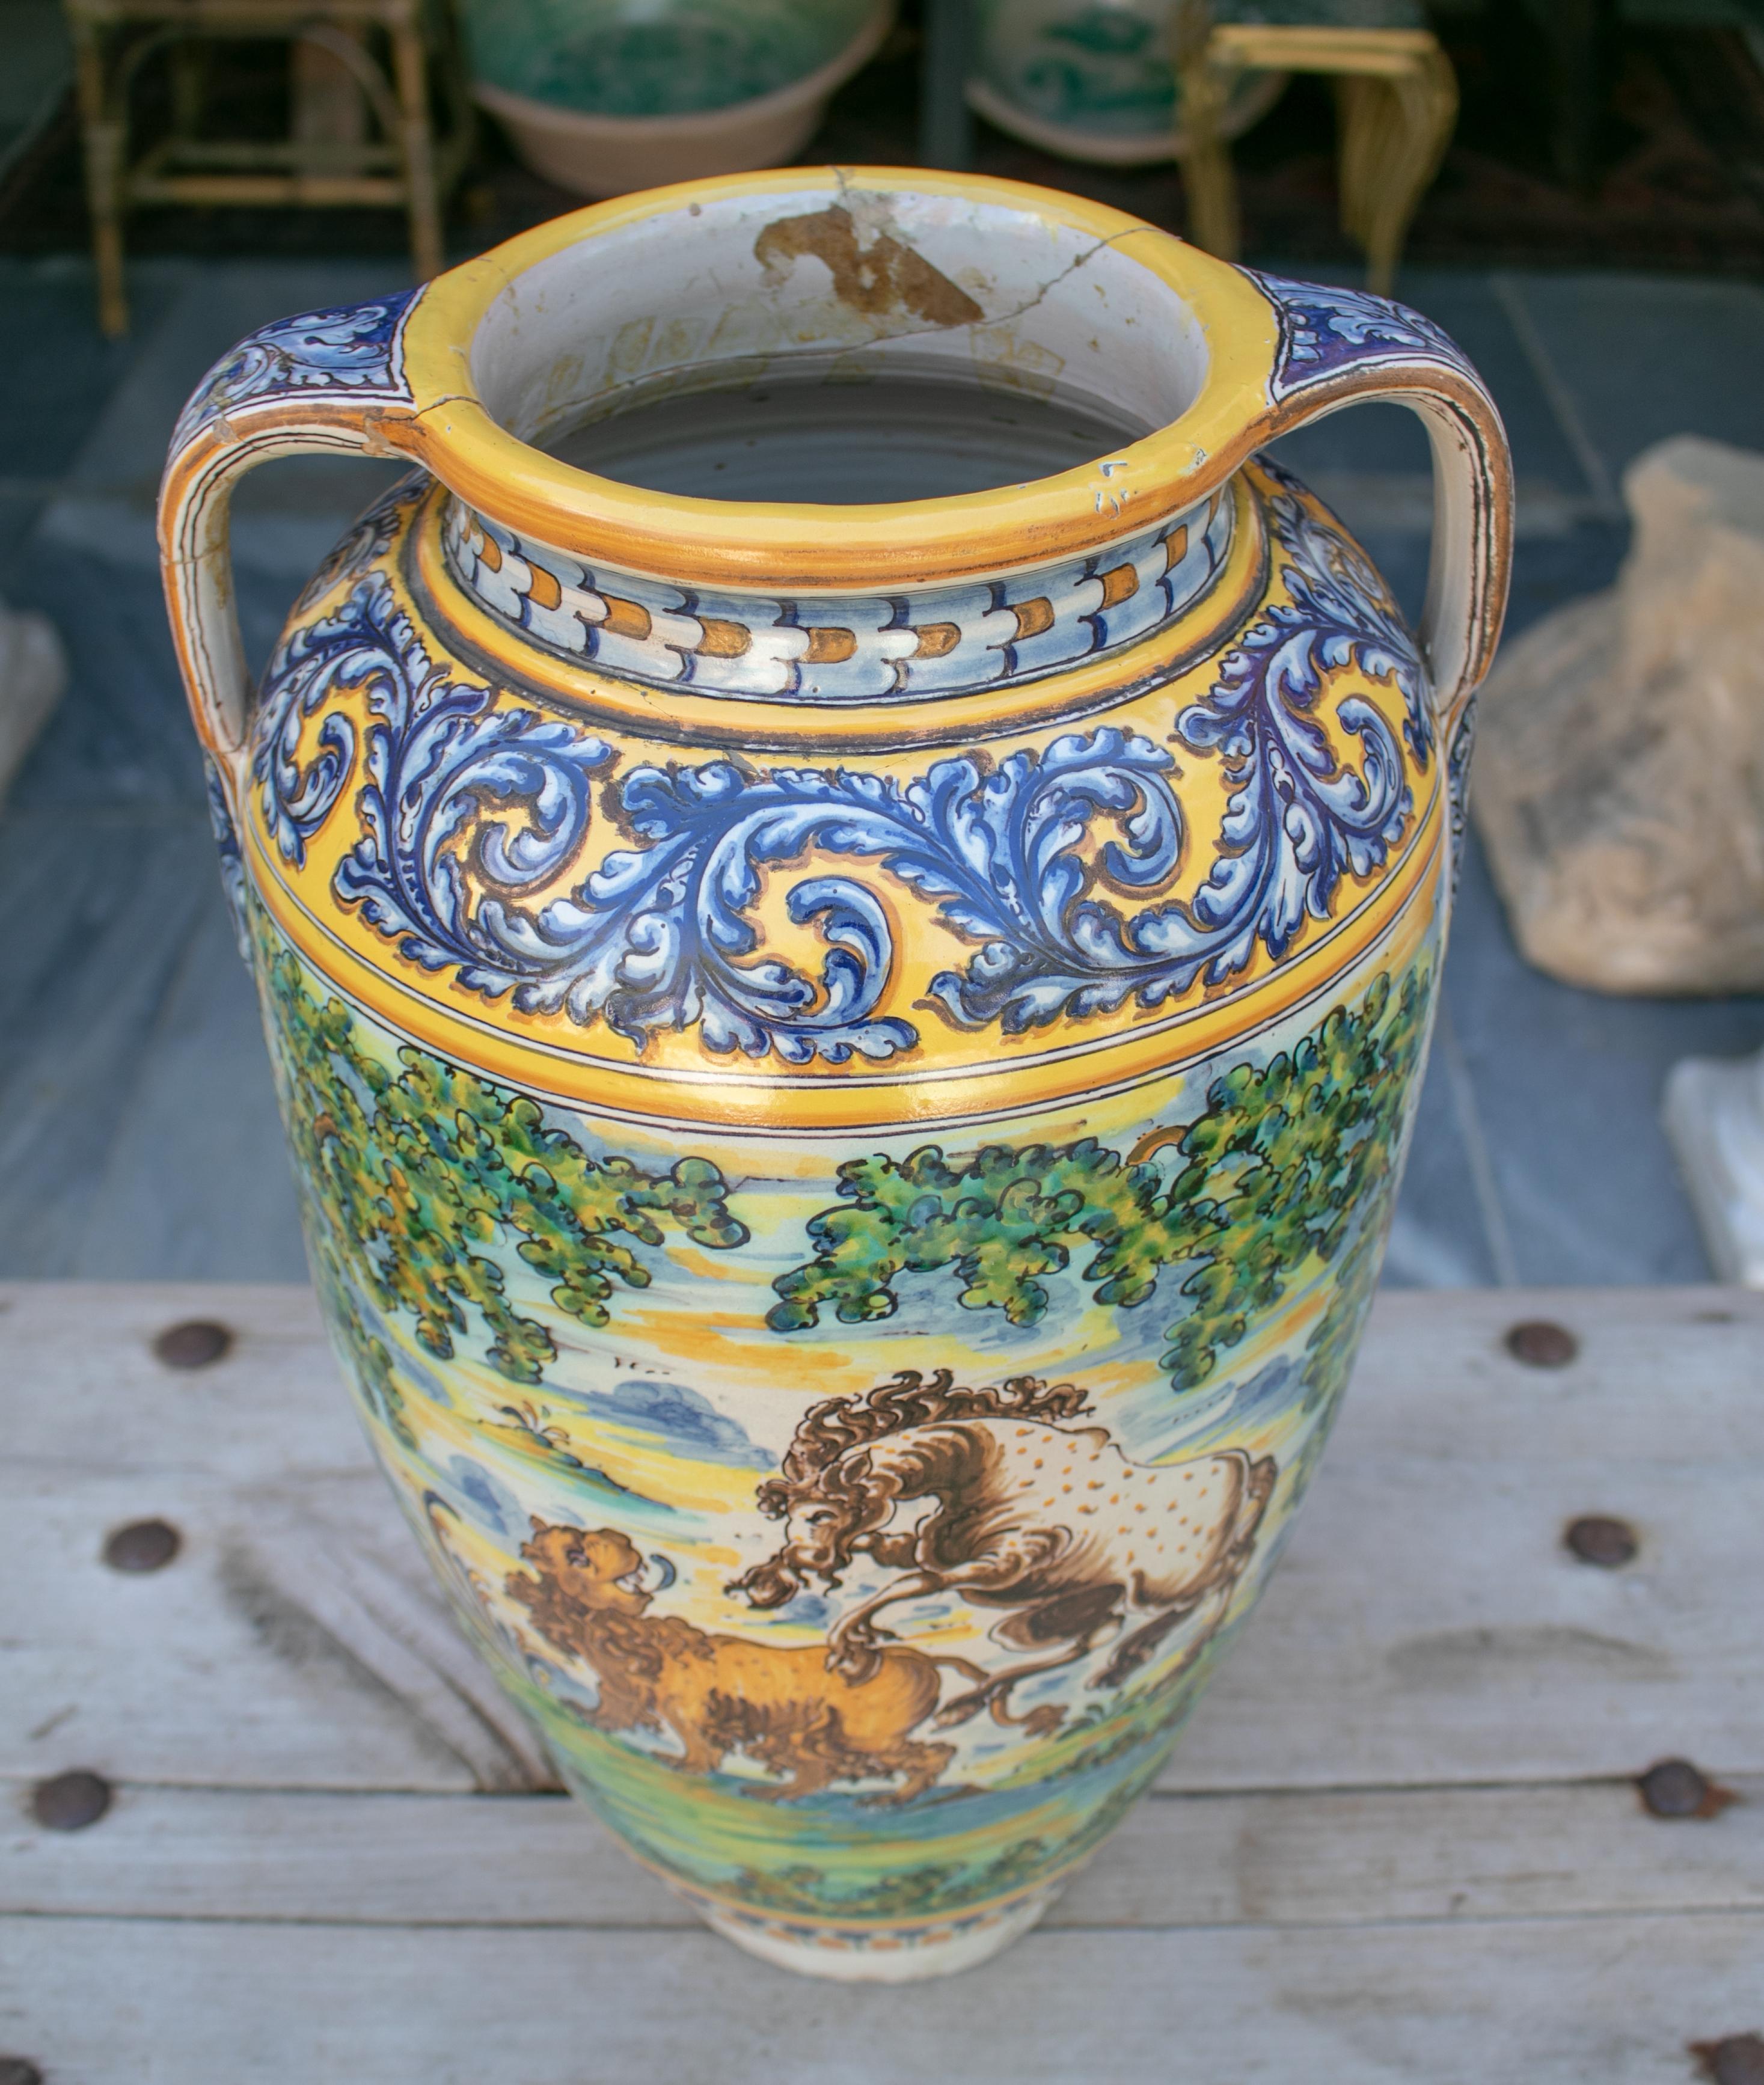 19th century Spanish Talavera porcelain vase with animals and horse rider scenes.